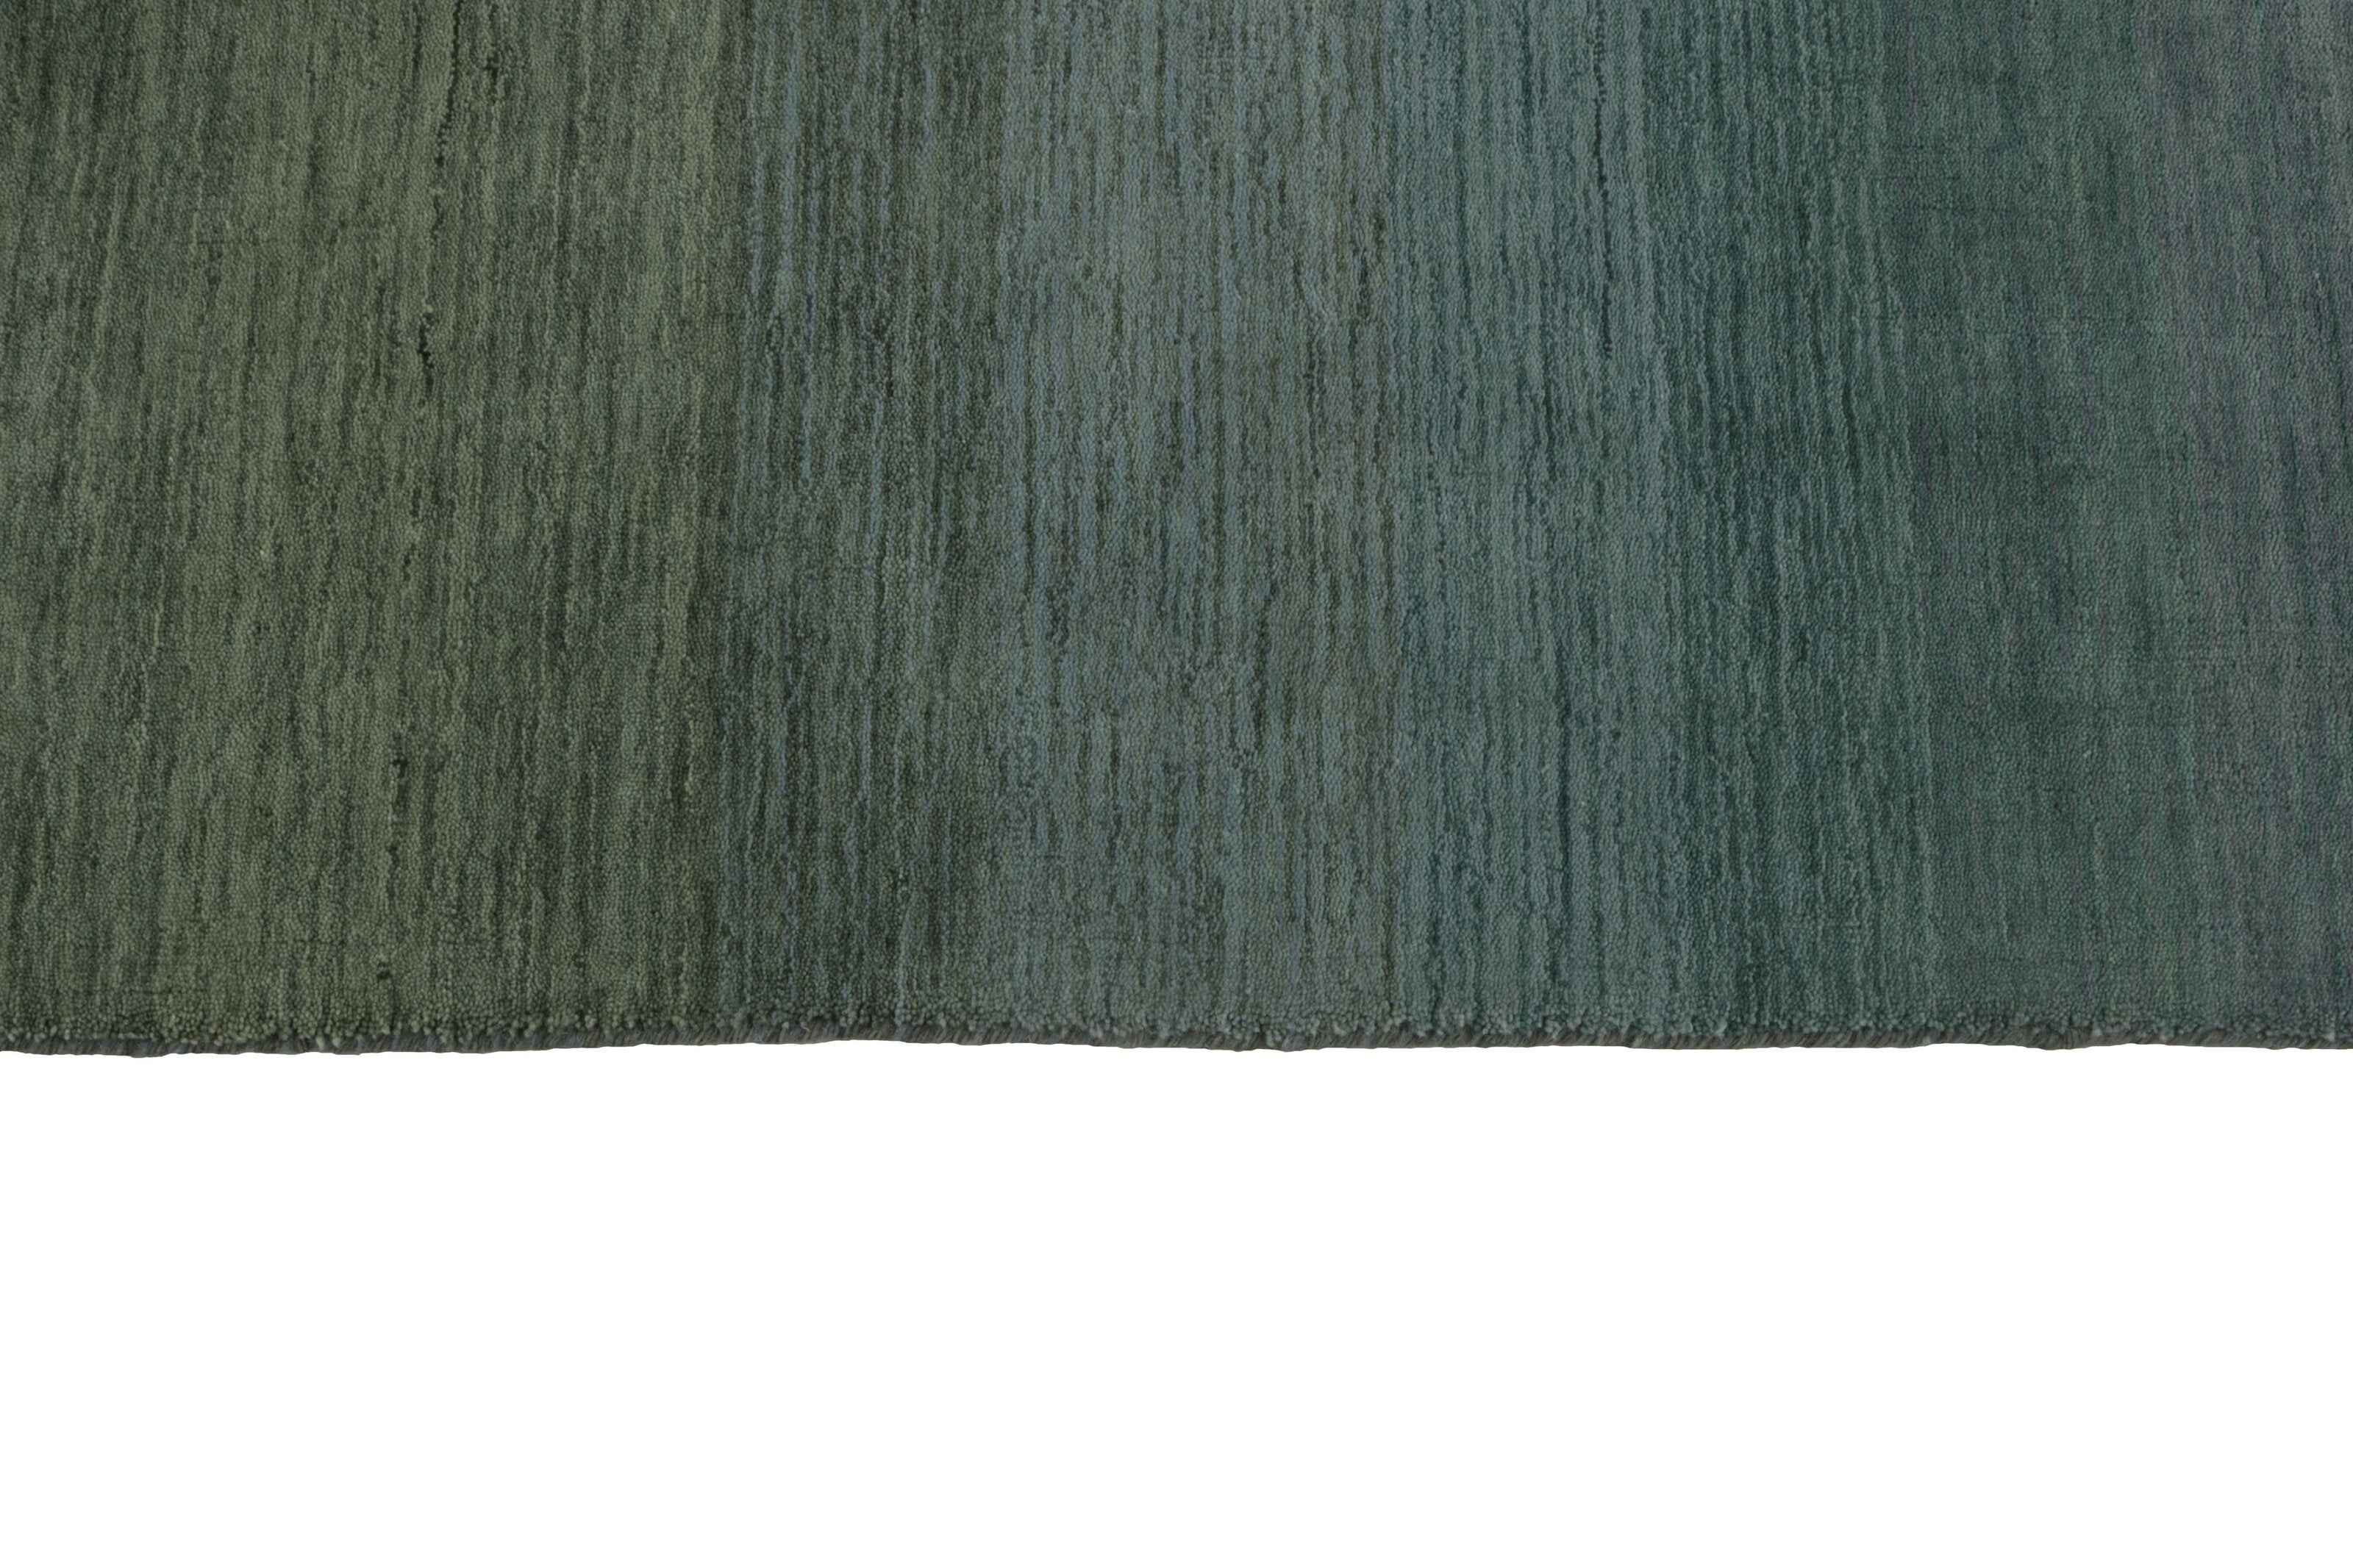 240 x 240 cm Indian Wool Black Rug-6029, Black Grey - Rugmaster